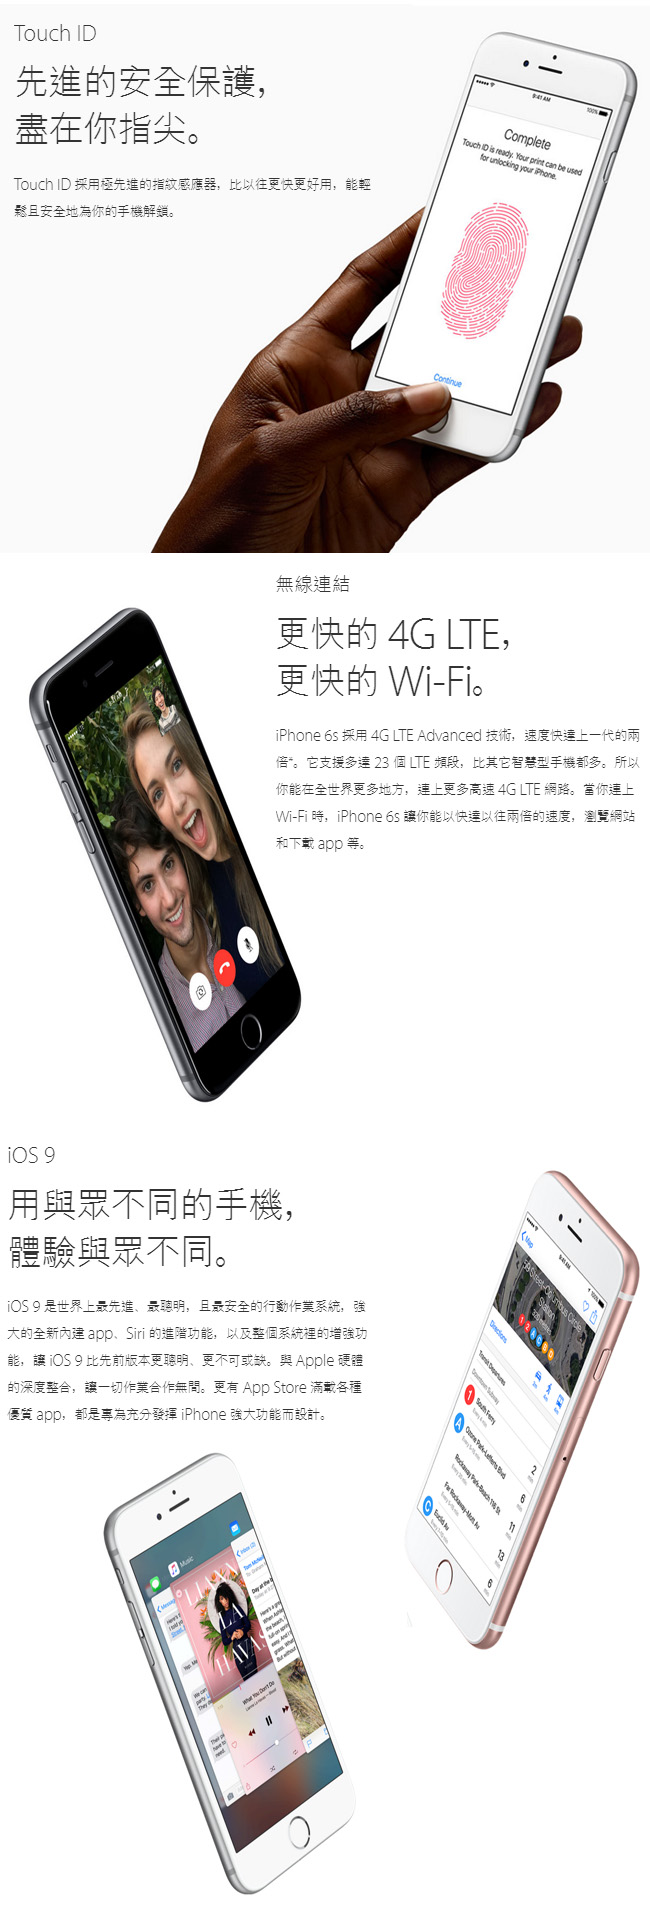 Apple iPhone 6s Plus 32G 5.5吋智慧型手機